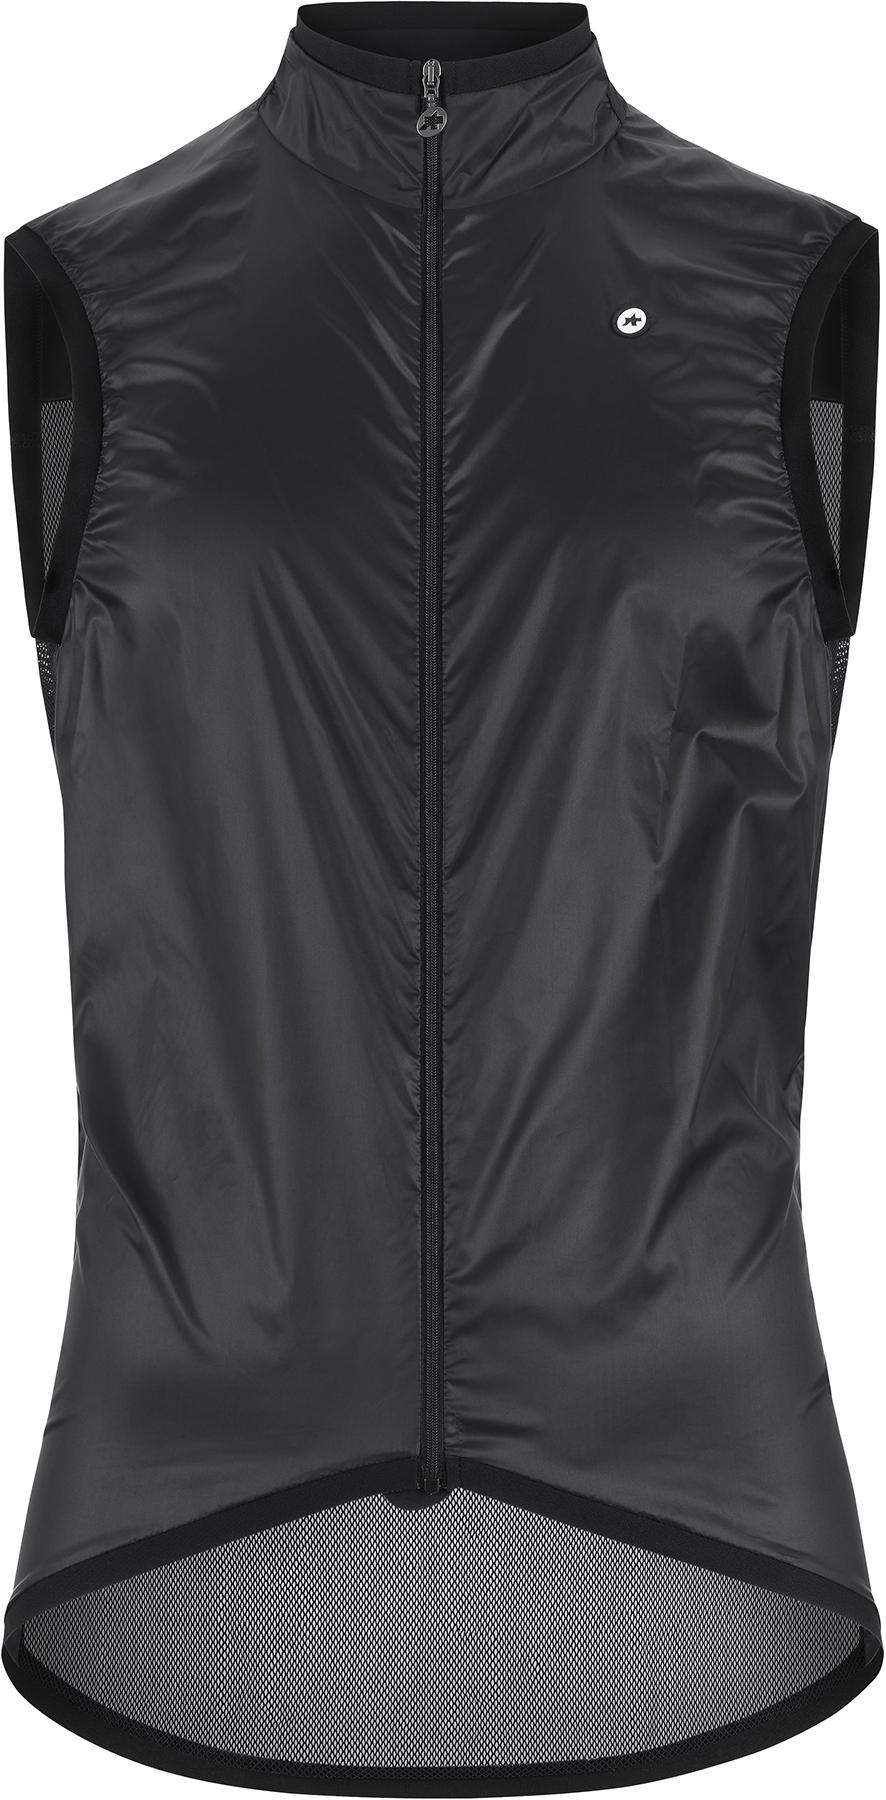 Assos Mille Gt Wind Vest C2 - Black Series